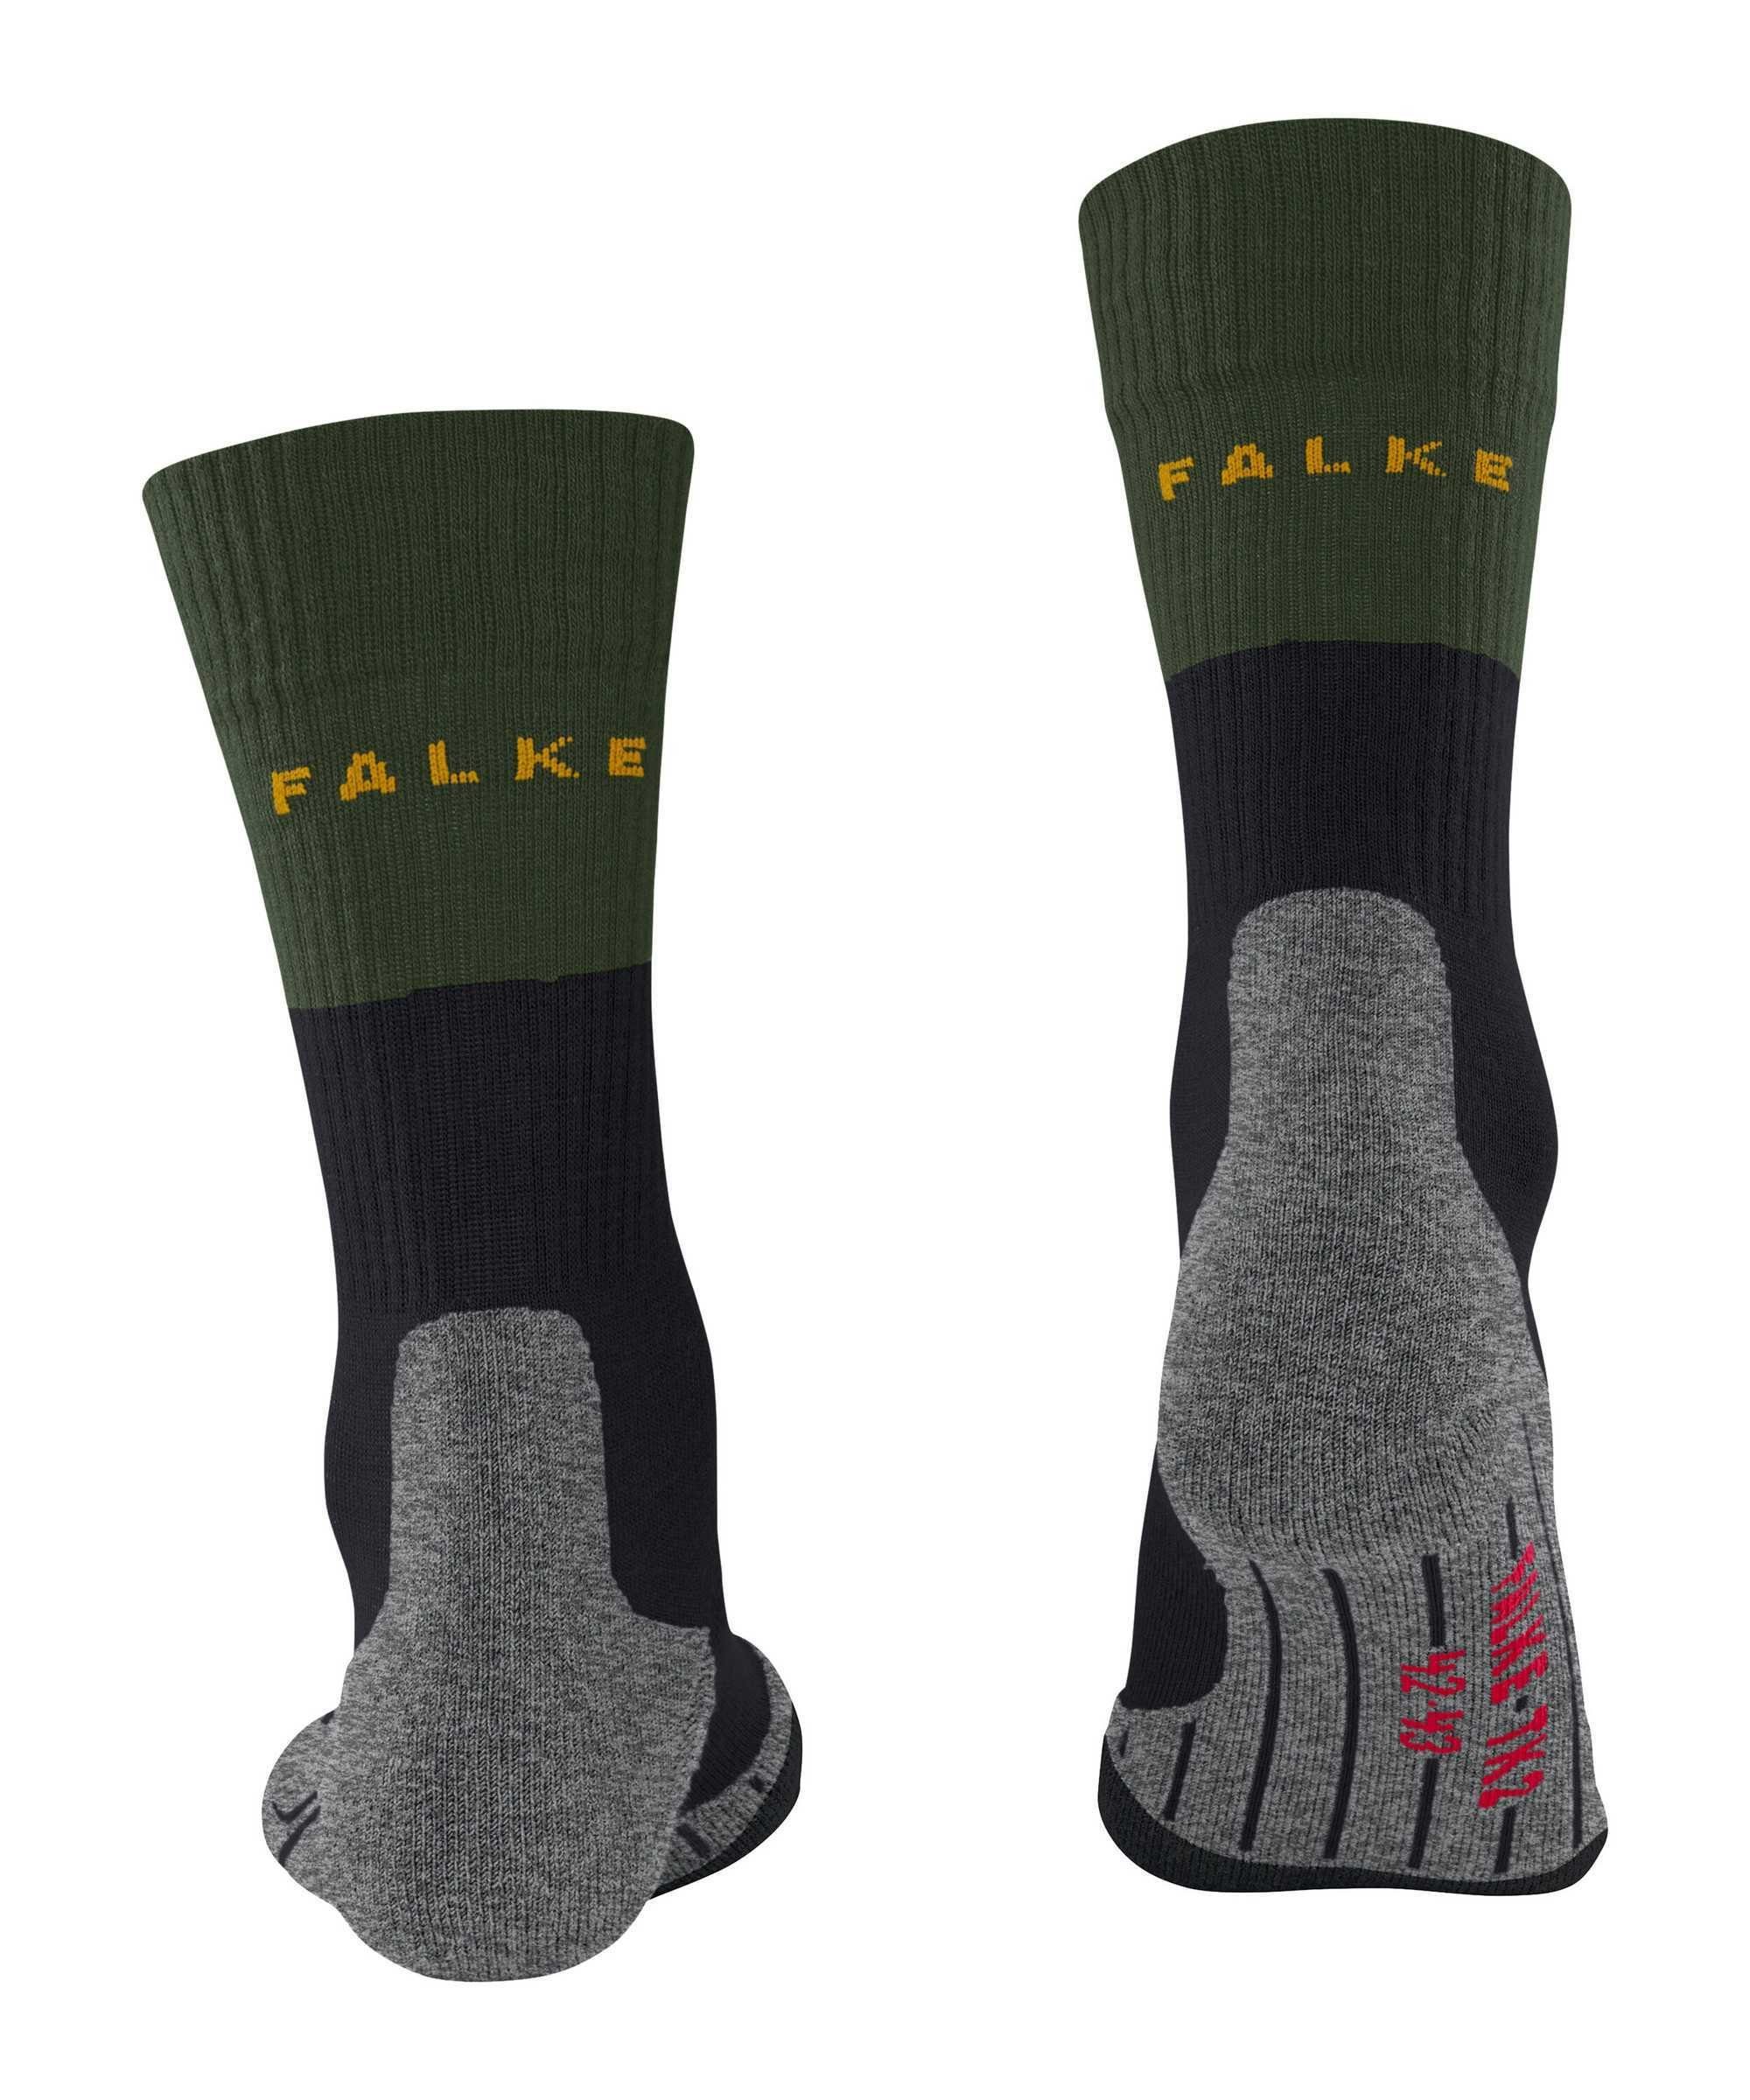 FALKE Sportsocken Herren Socken Schwarz/Grau/Grün Polsterung (Vertigo) - TK2, Socken Trekking